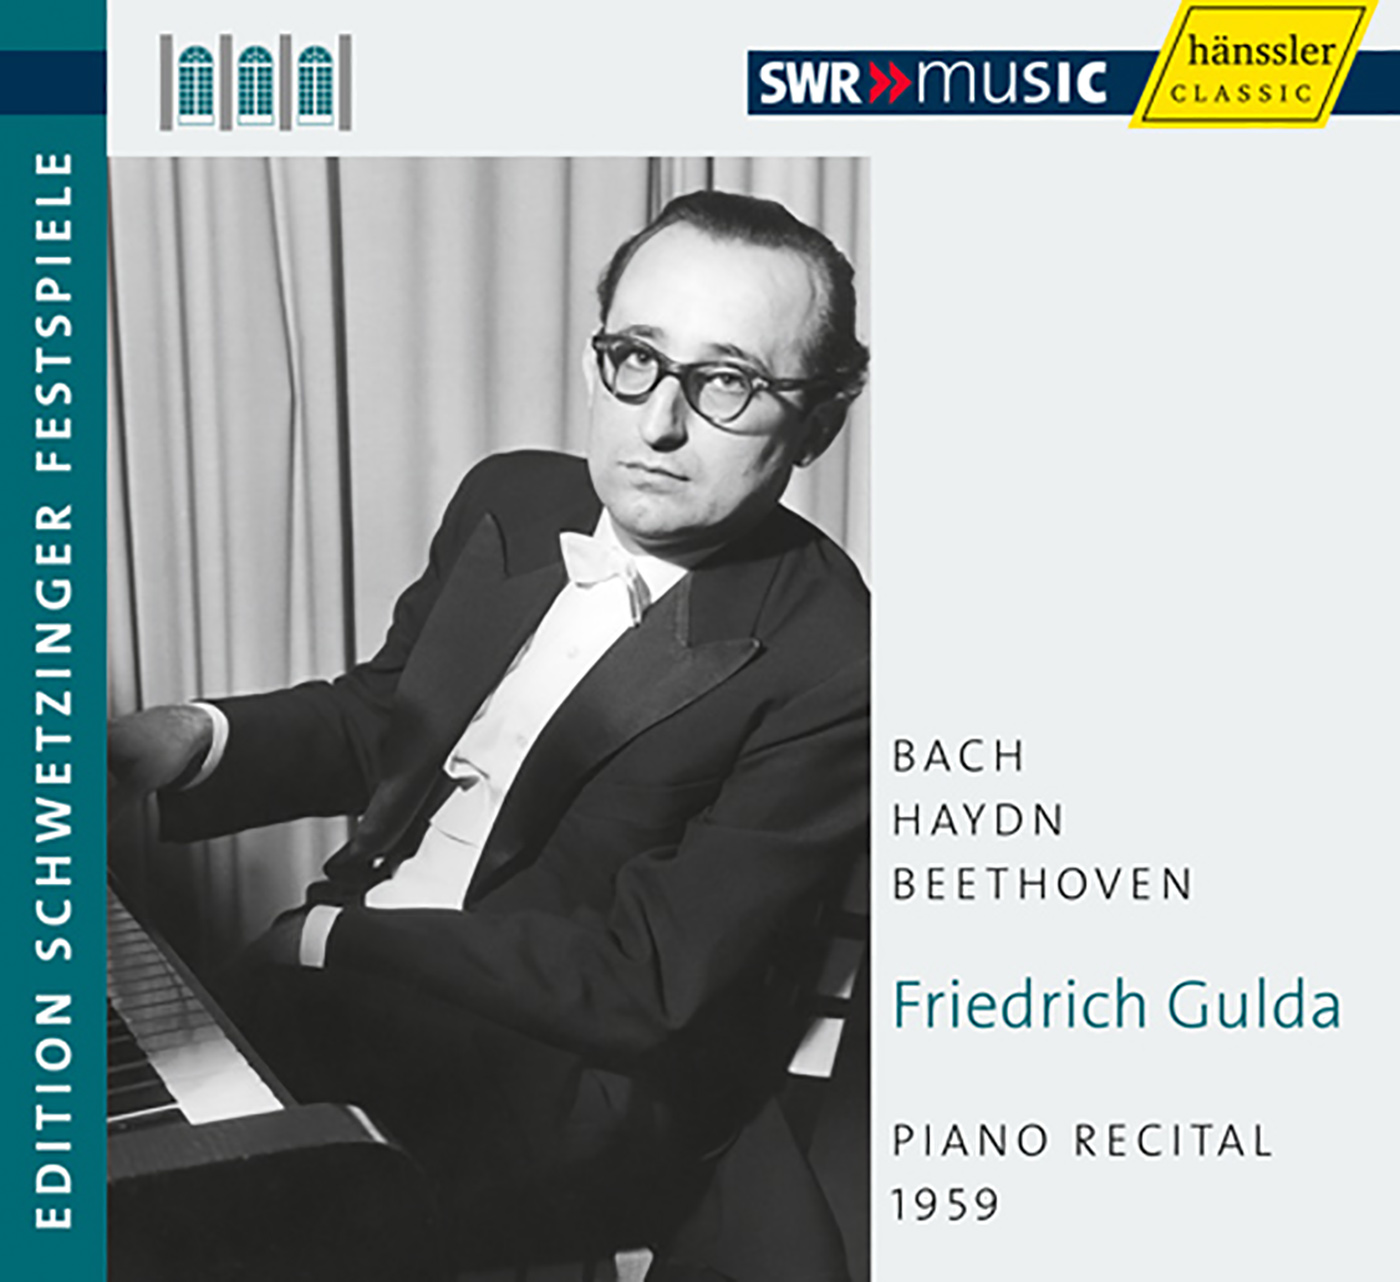 Piano Recital: Gulda, Friedrich - BACH, J.S. / HAYDN, J. / BEETHOVEN, L. van (Schwetzinger Festspiele Edition, 1959)